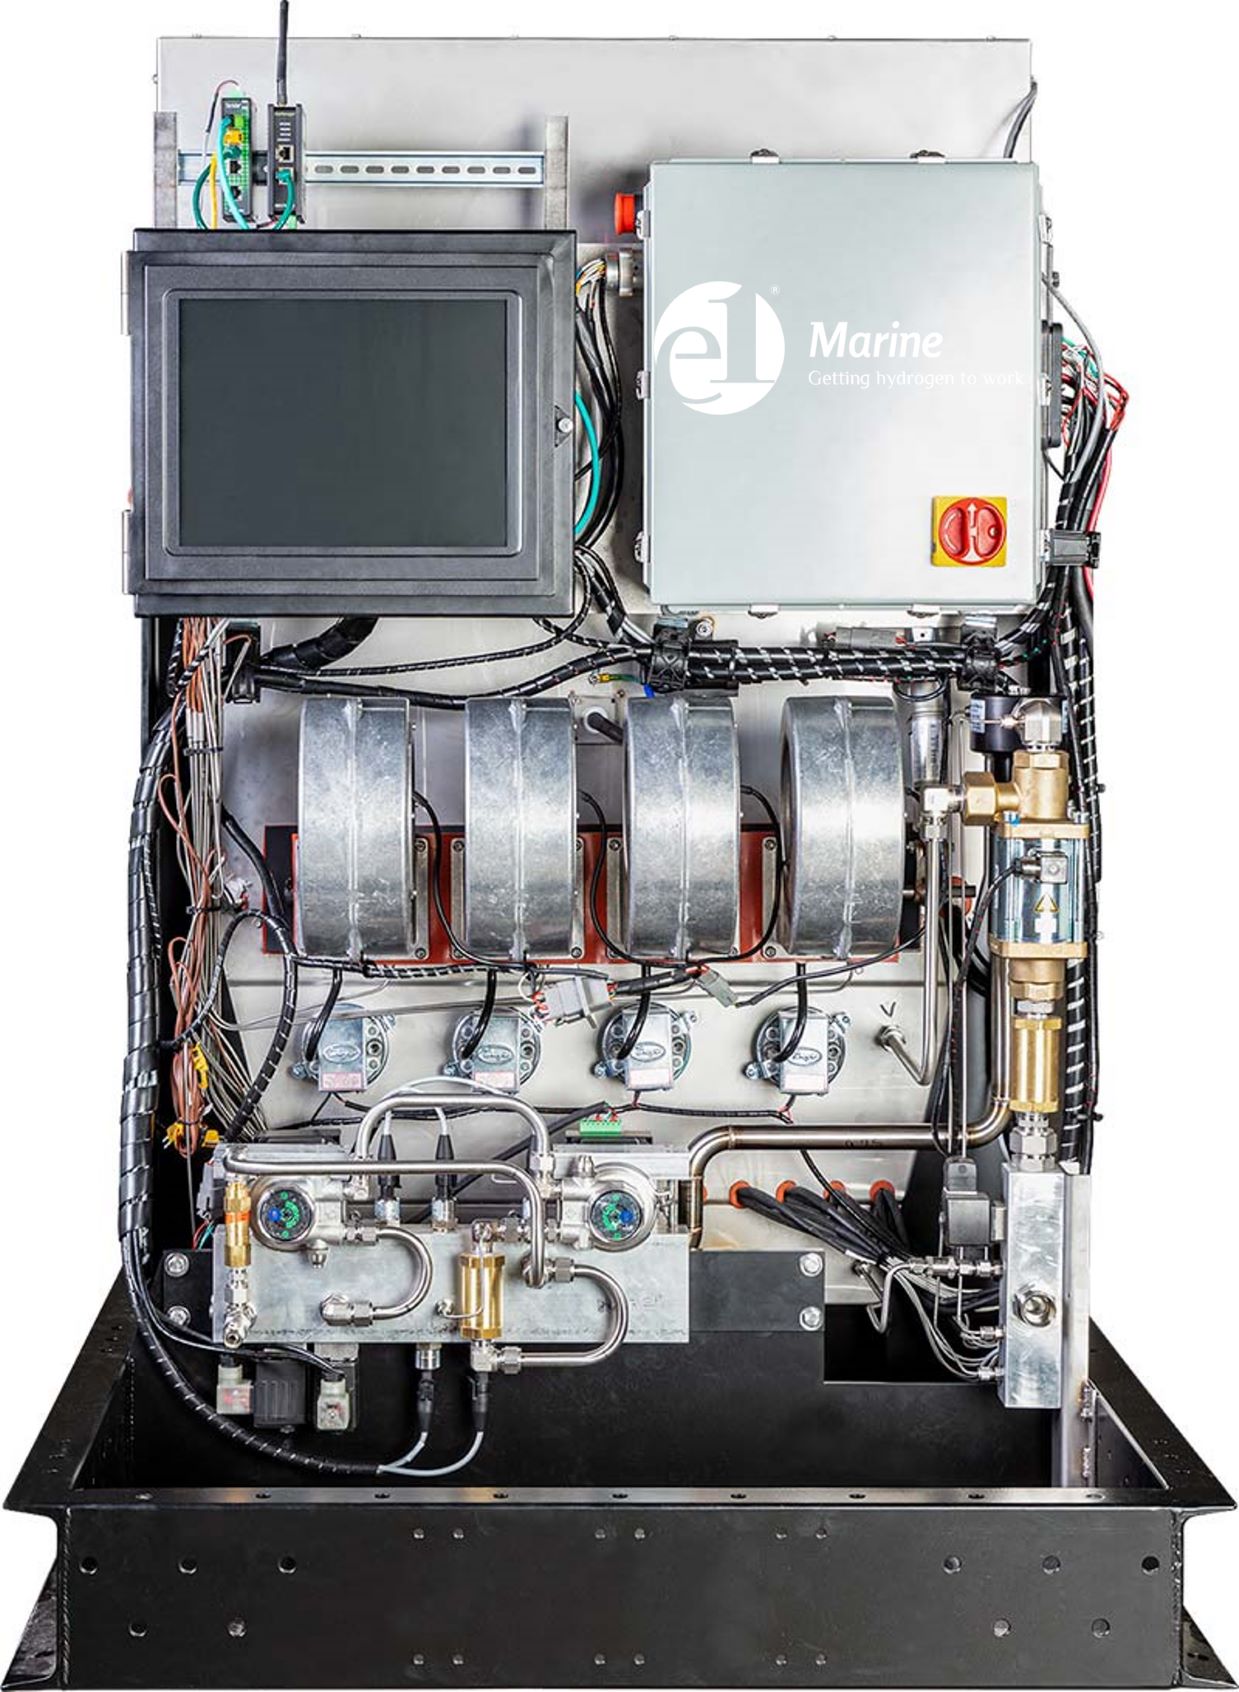 e1 Marine's methanol to hydrogen generator M18